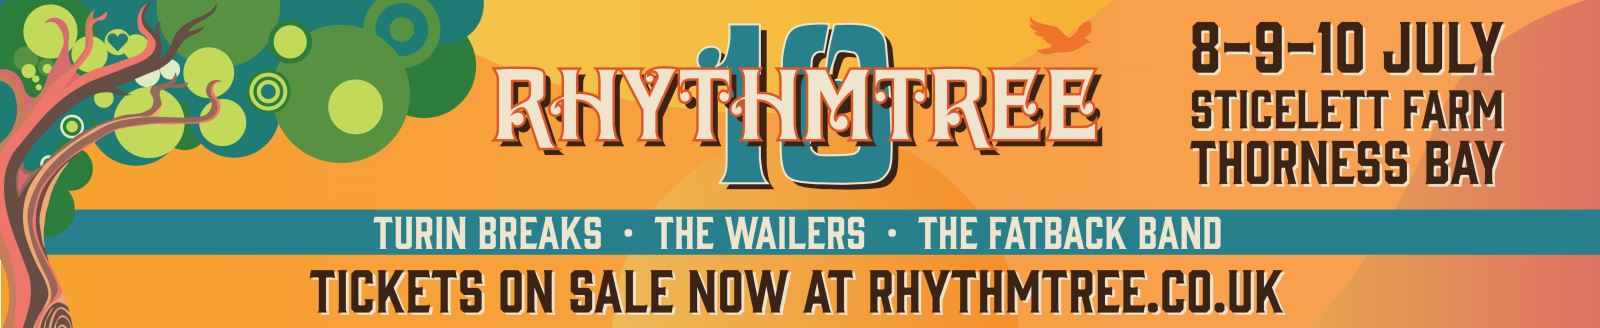 Rhythmtree Festival - book tickets